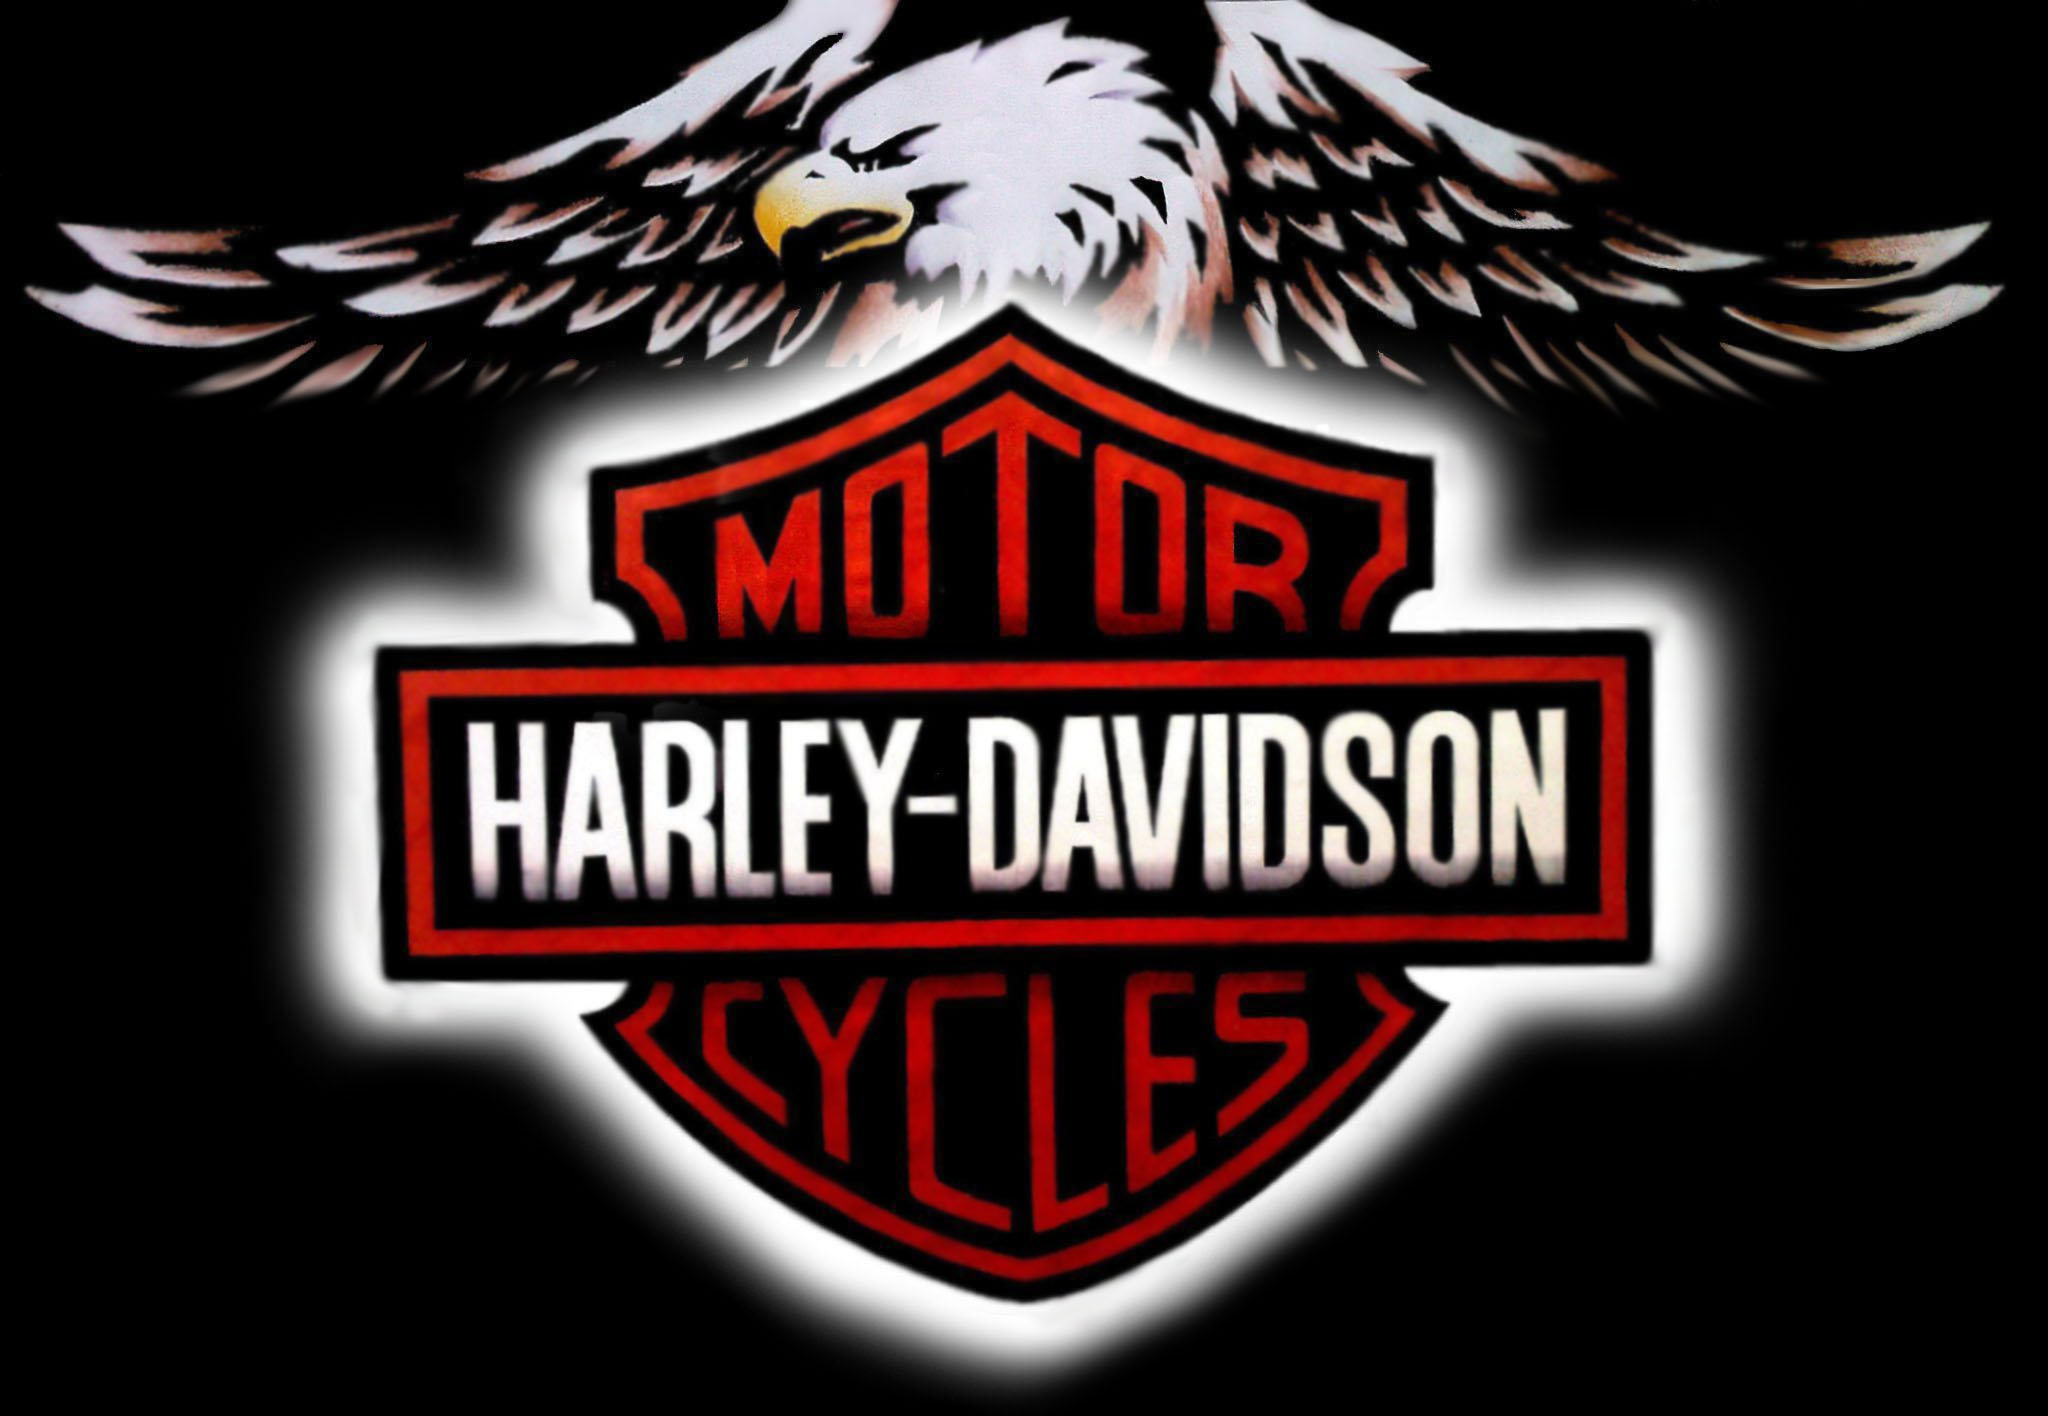 Harley Davidson on Pinterest | Harley Davidson Logo, Harley ...